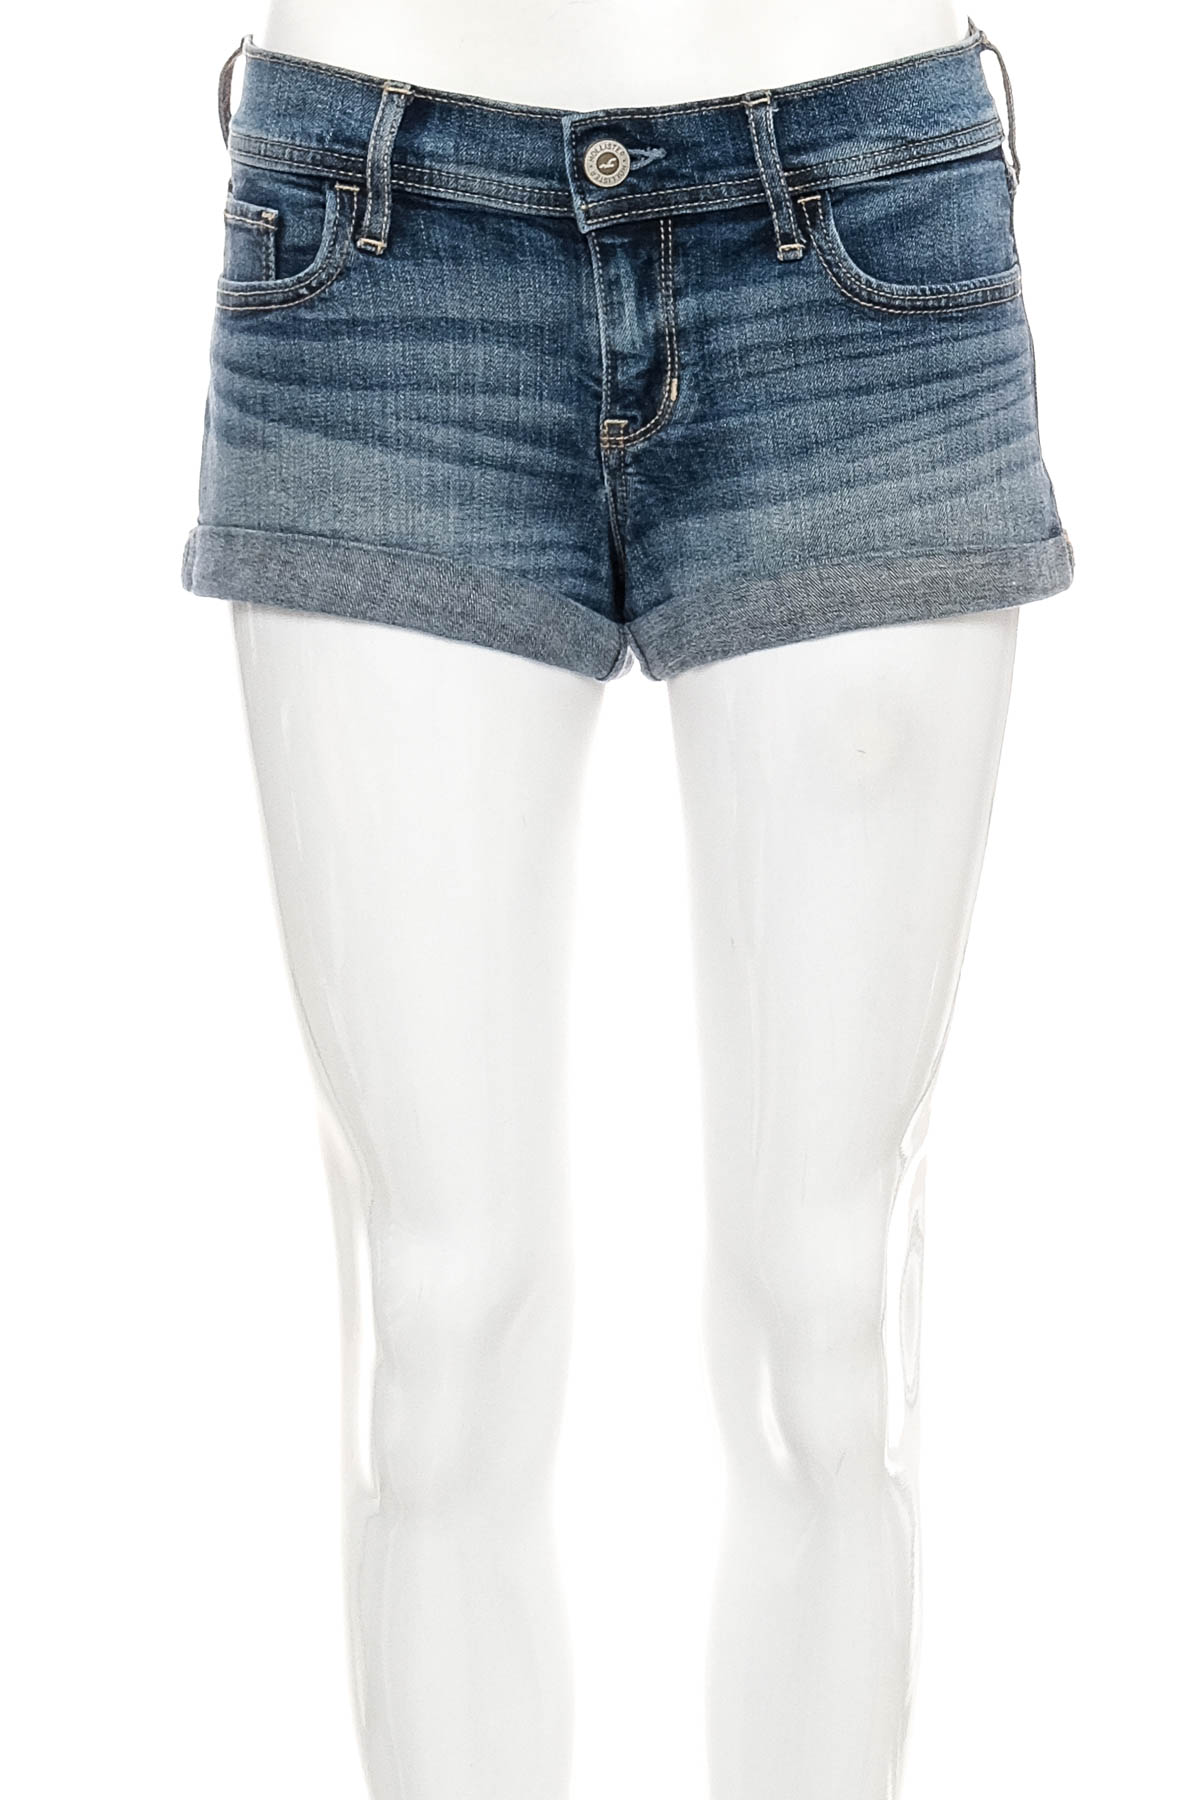 Female shorts - Hollister - 0